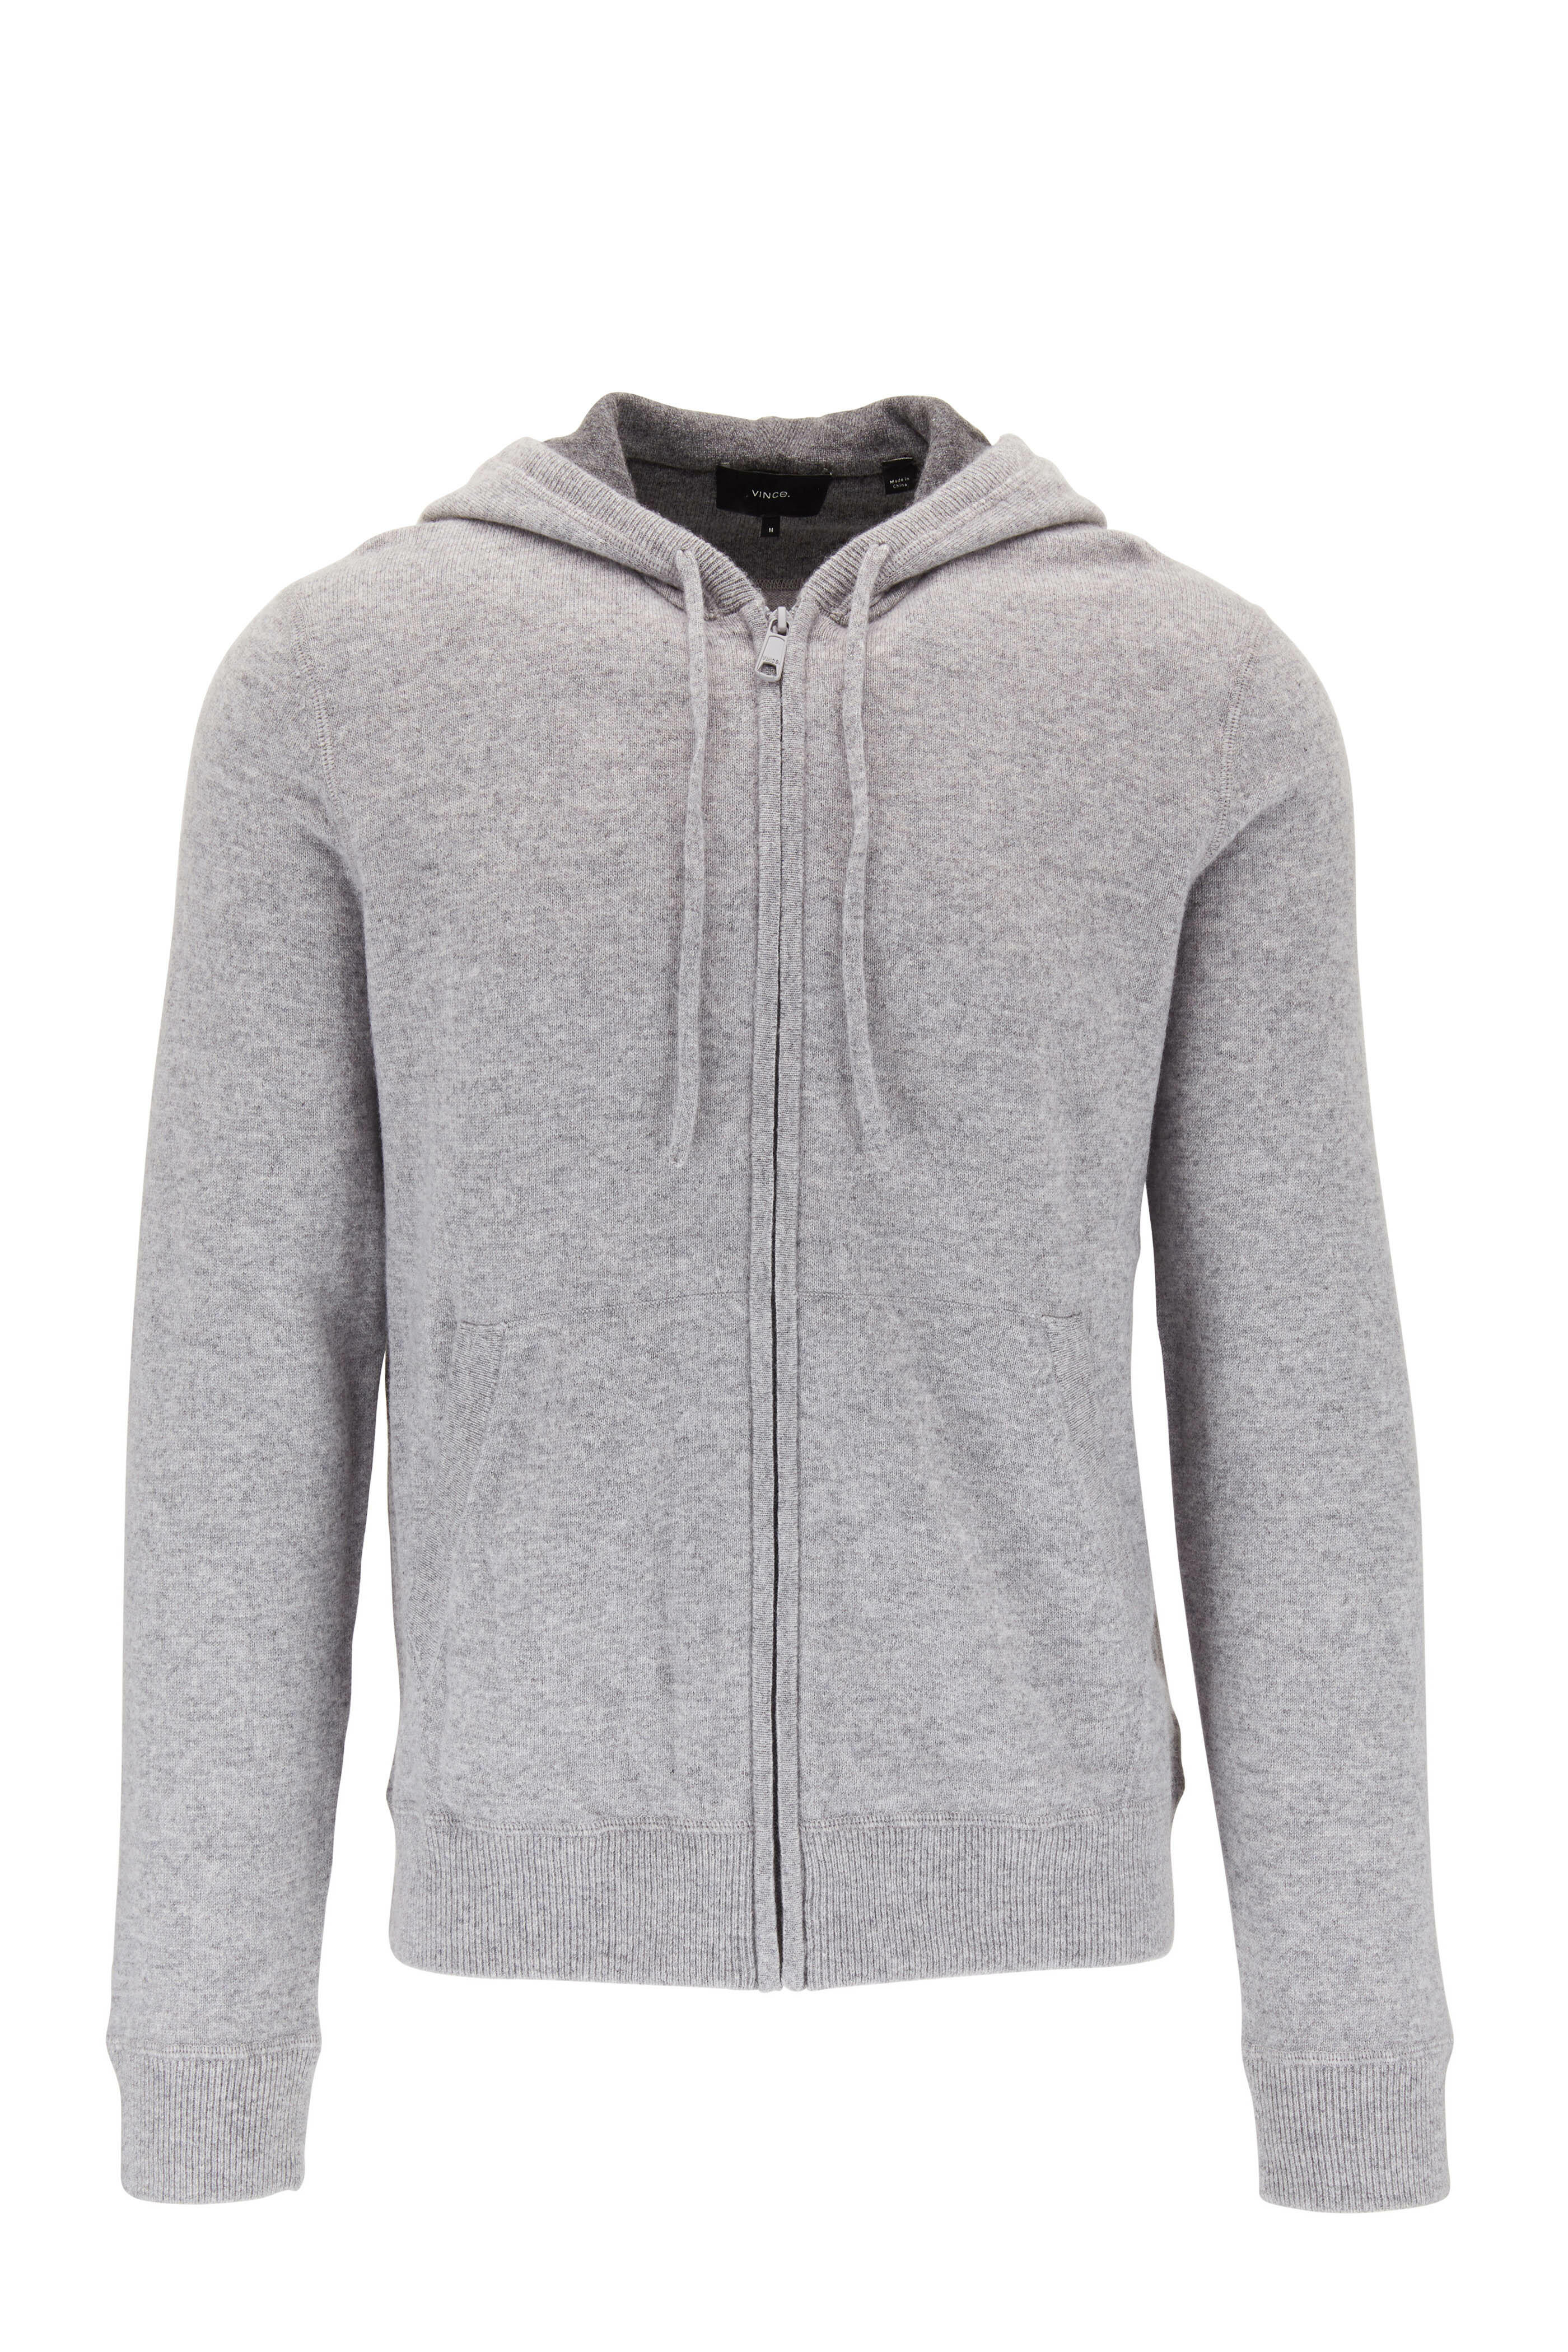 Monogram Motif Cashmere Cotton Blend Zip Hoodie in Storm Grey